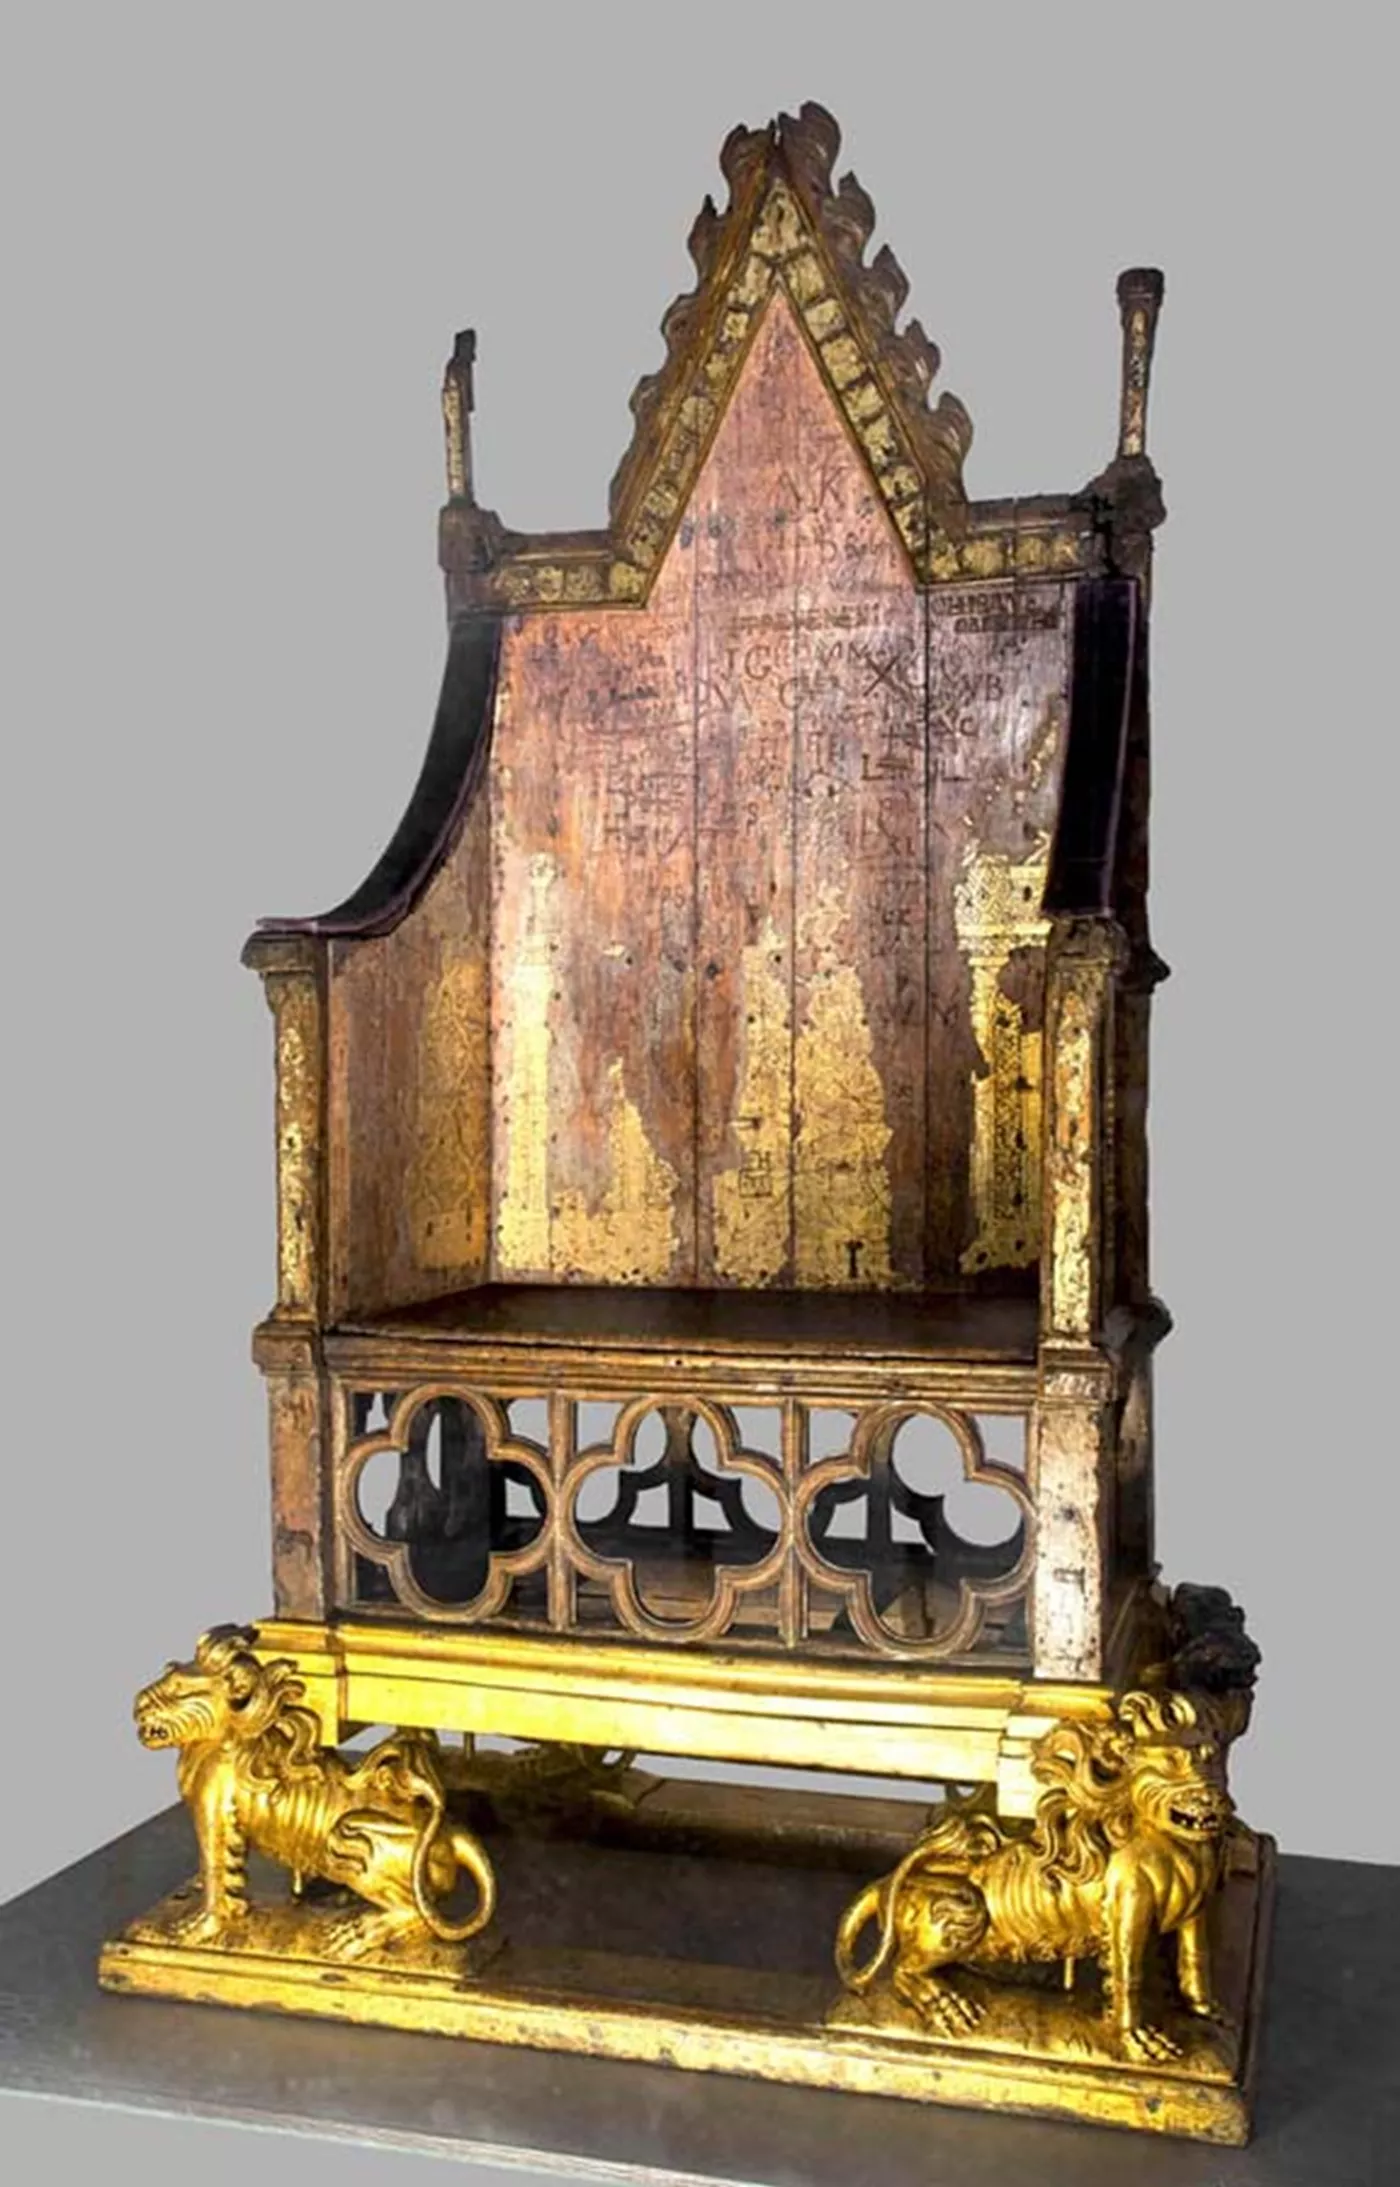 coronation chair 2012 new tracery 700-летний дубовый трон реставрируется к коронации короля Карла III